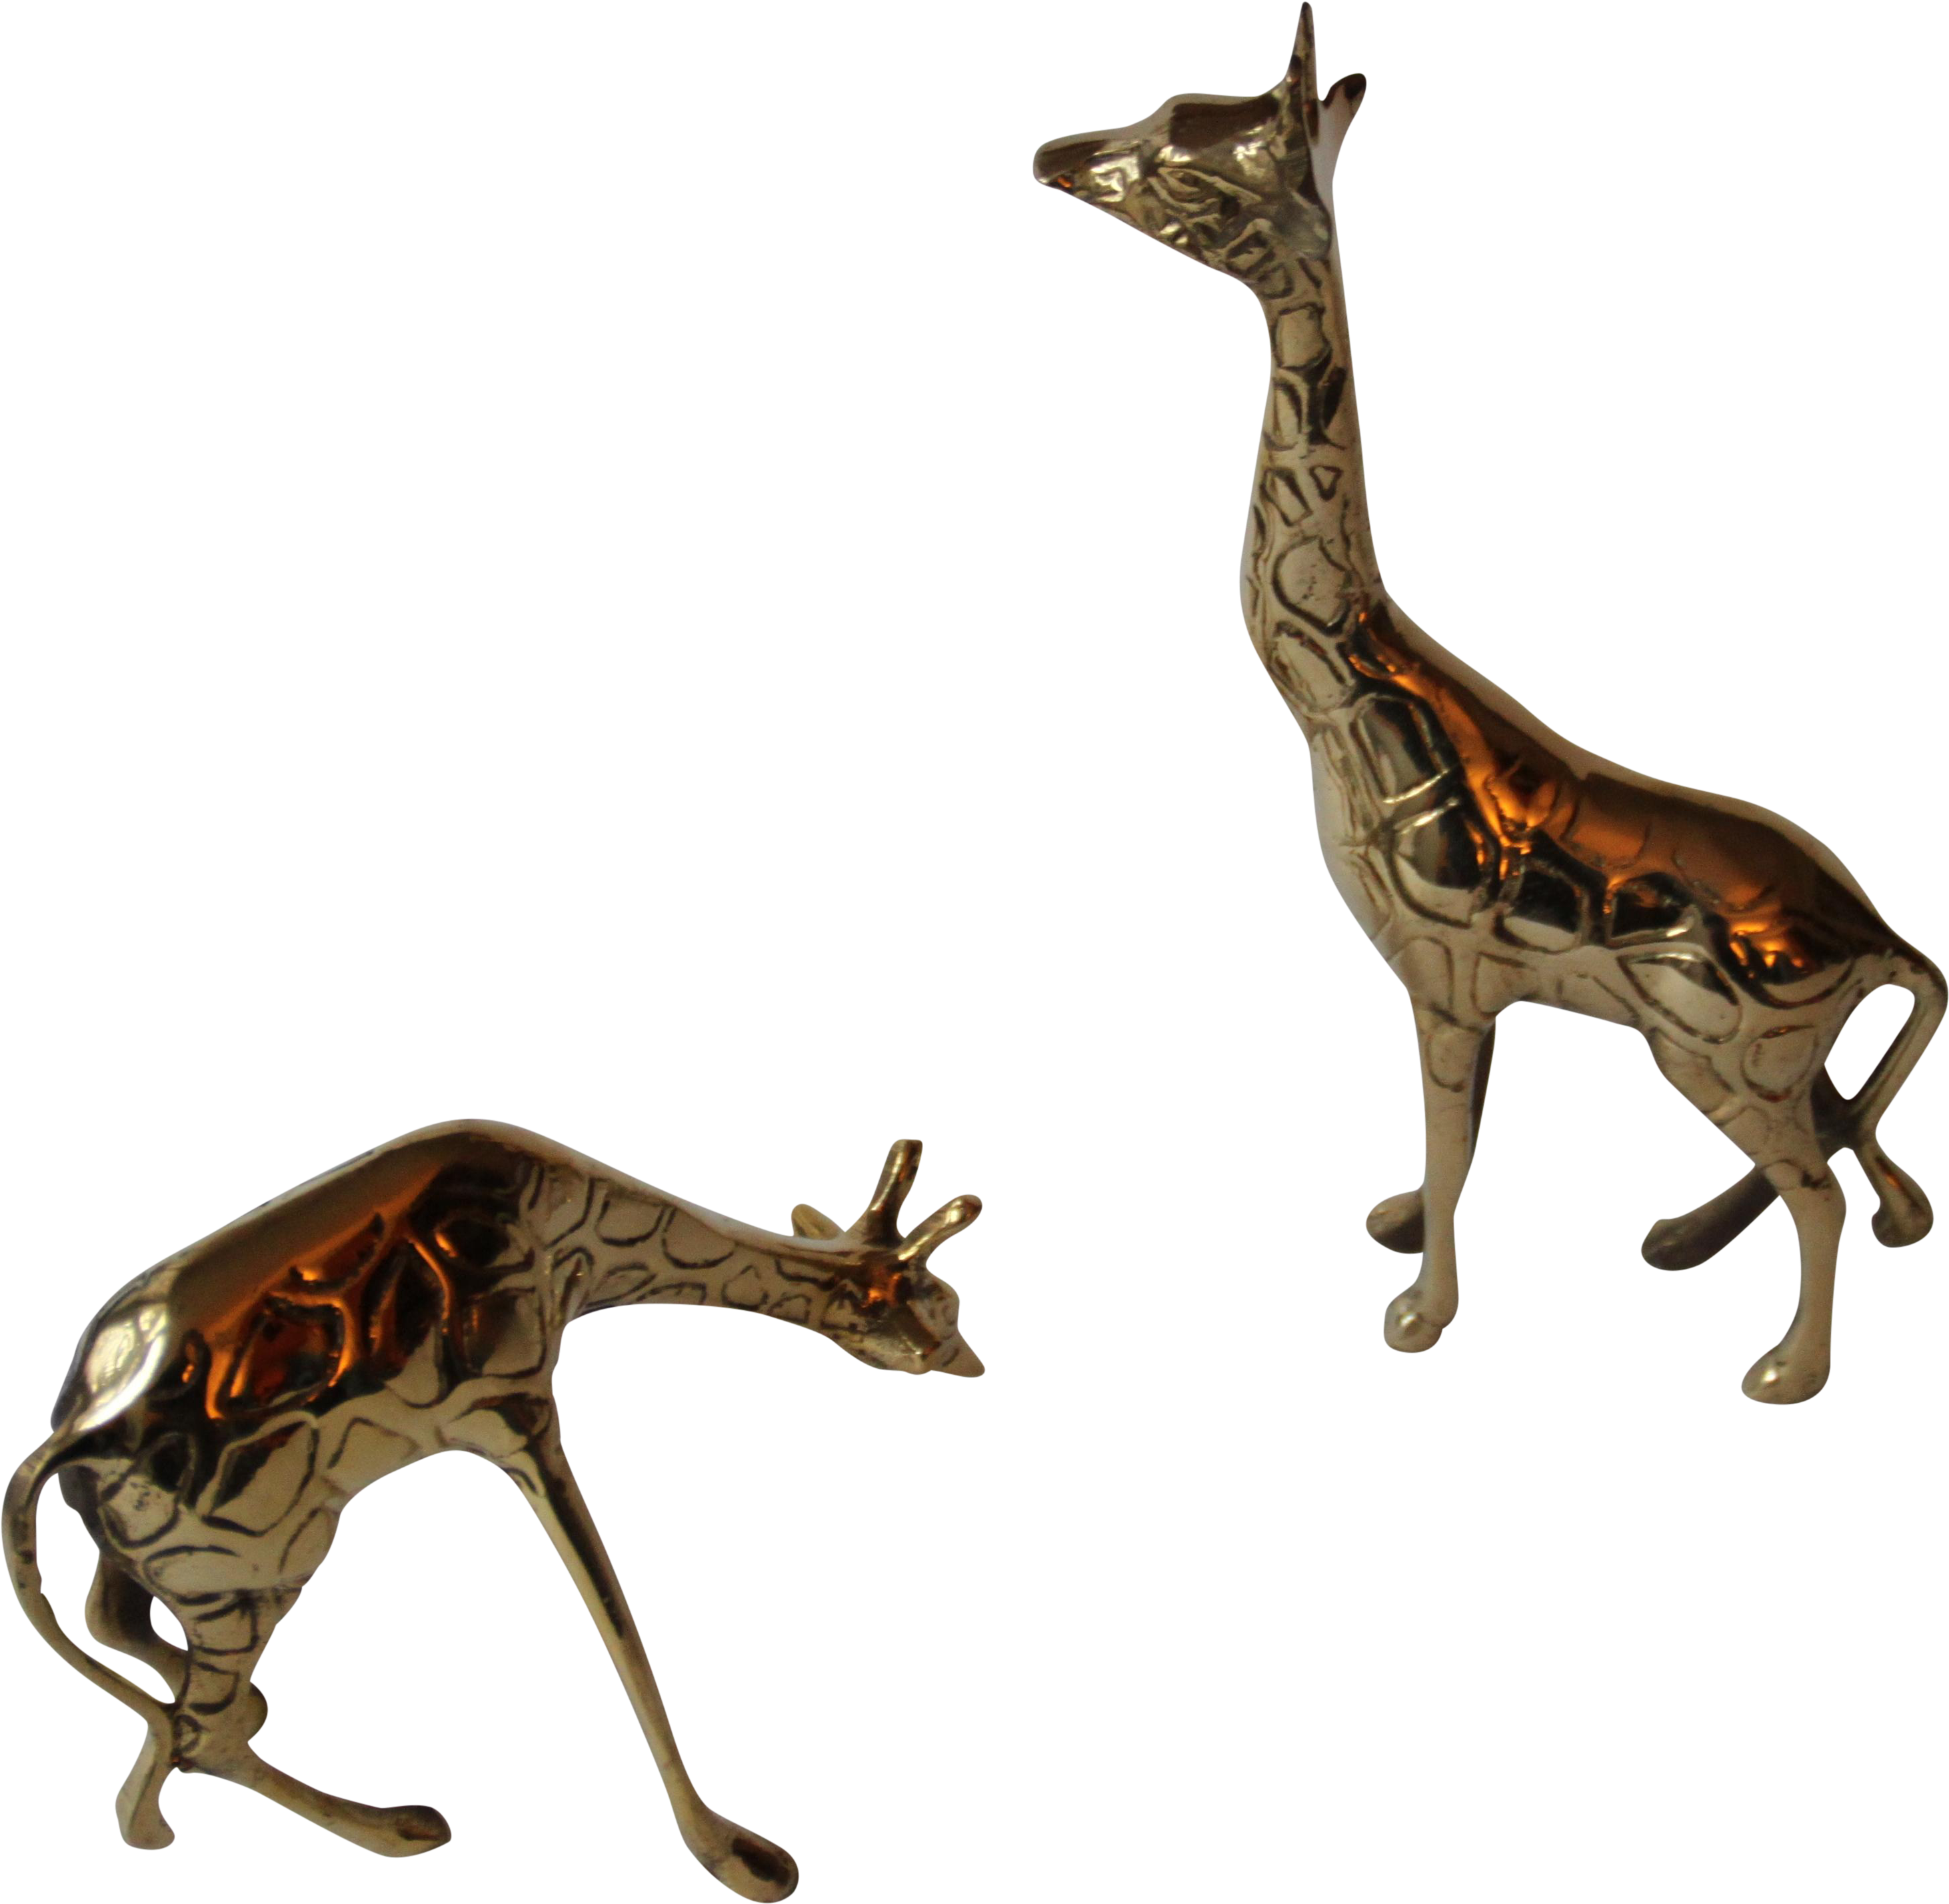 Giraffe (4752x3168)